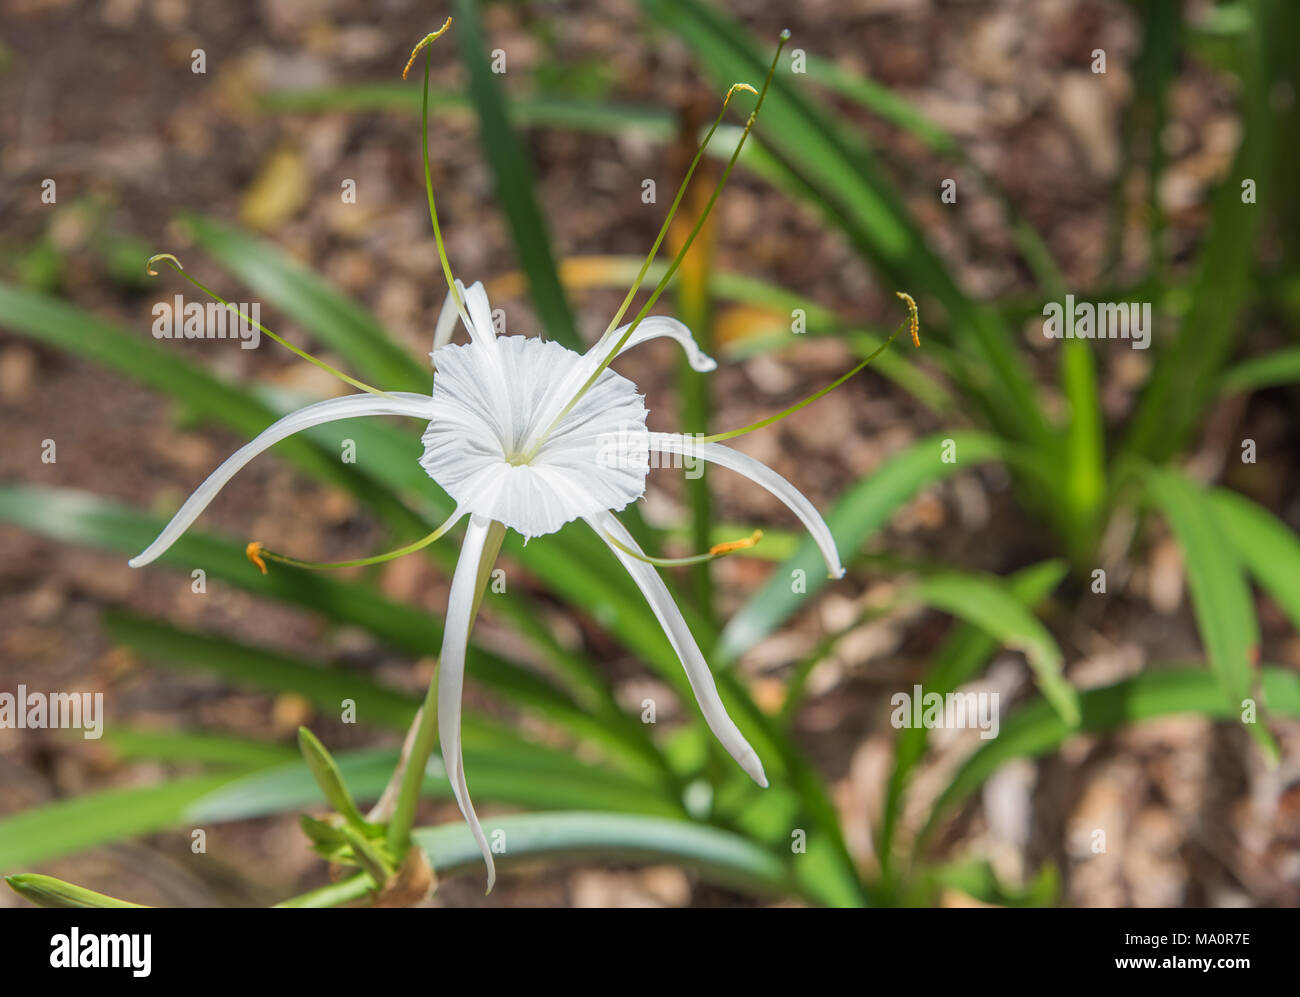 White spider lily blossom with foliage in Darwin, Australia Stock Photo